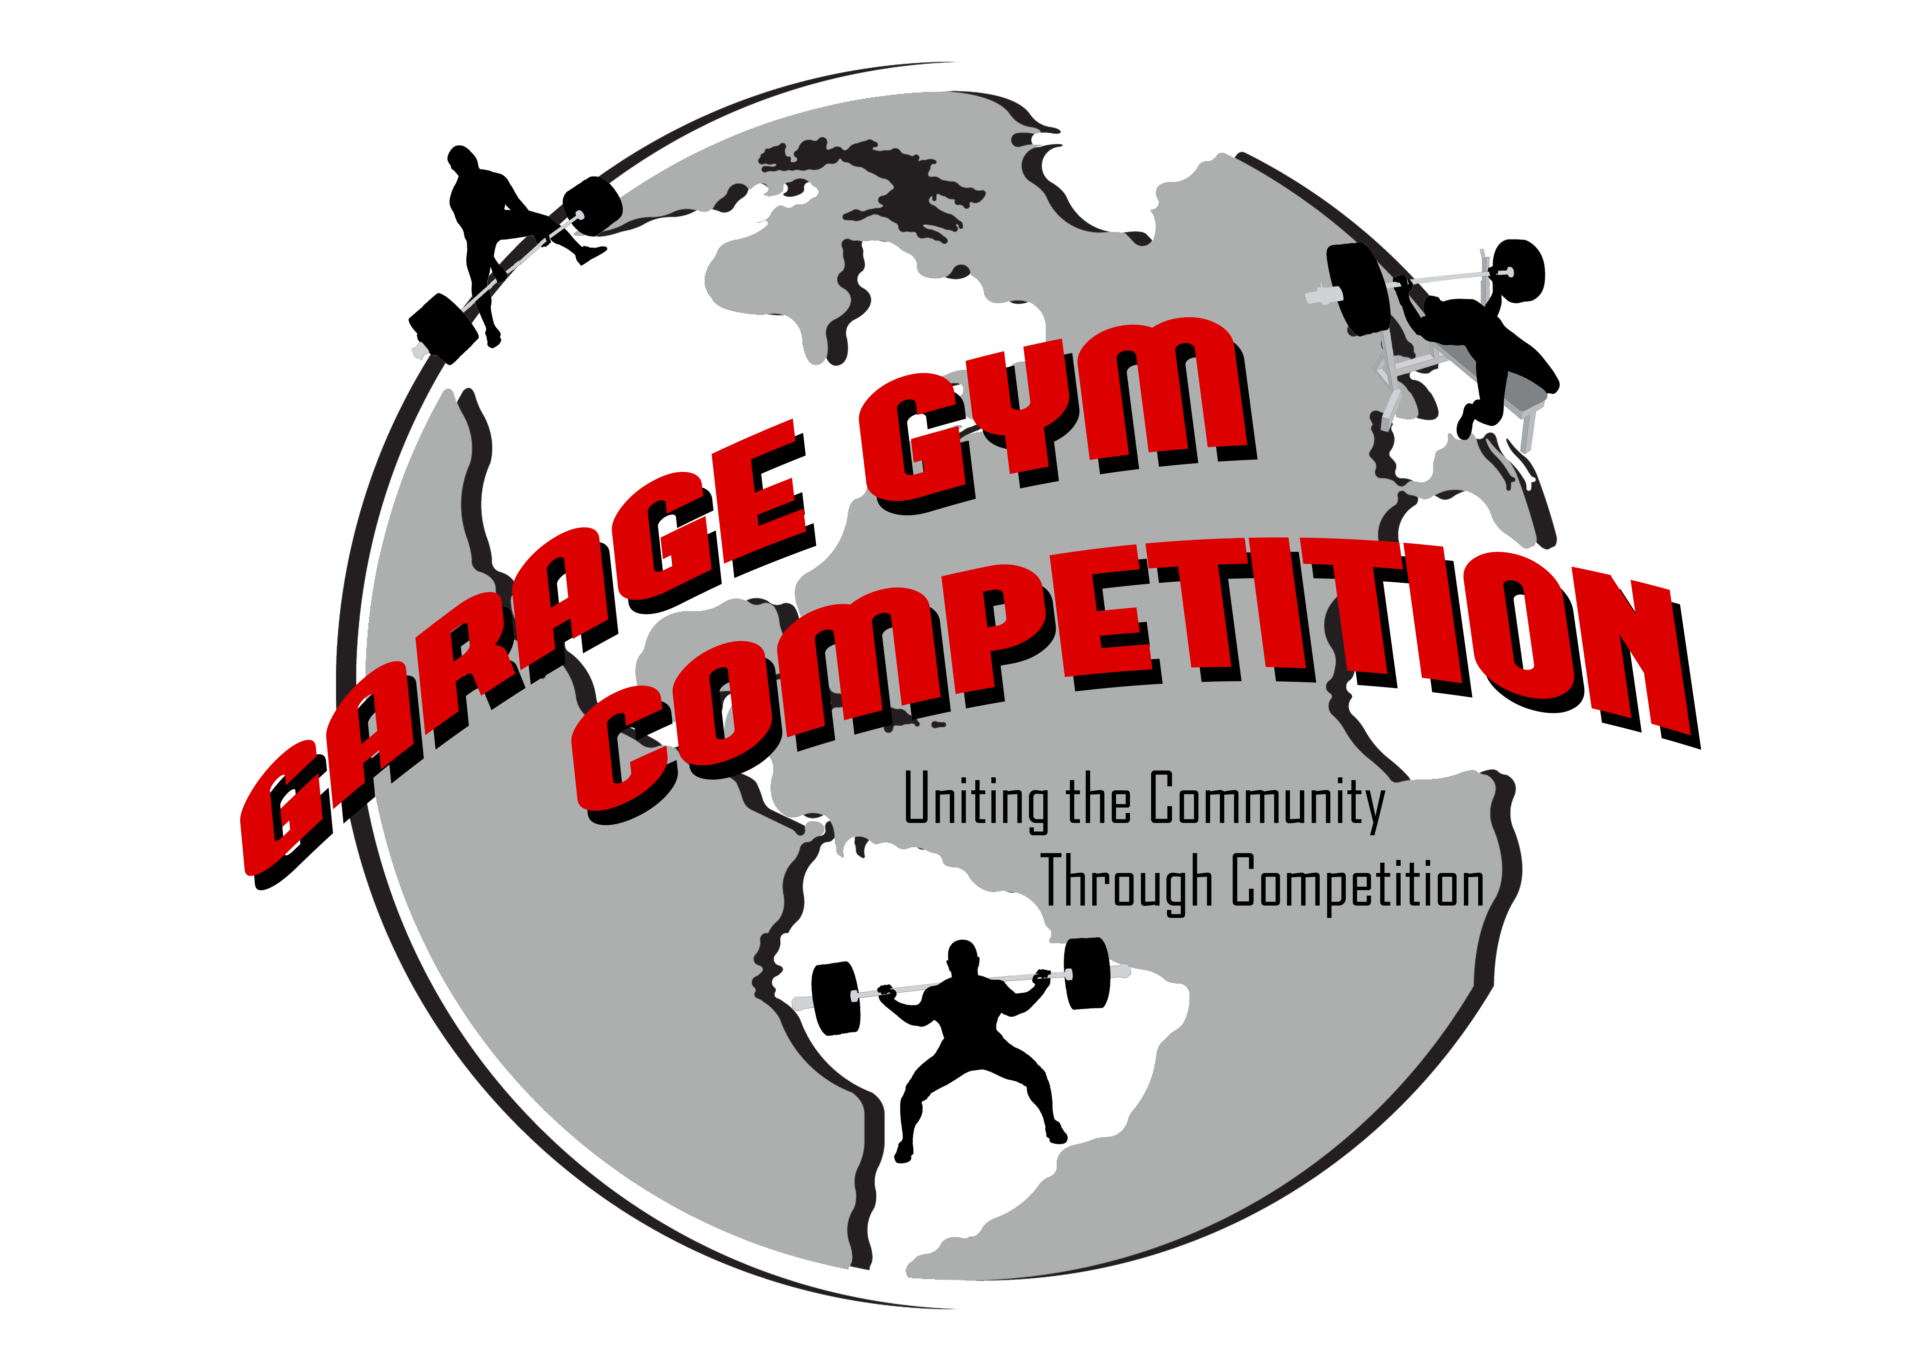 Garage Gym Competition